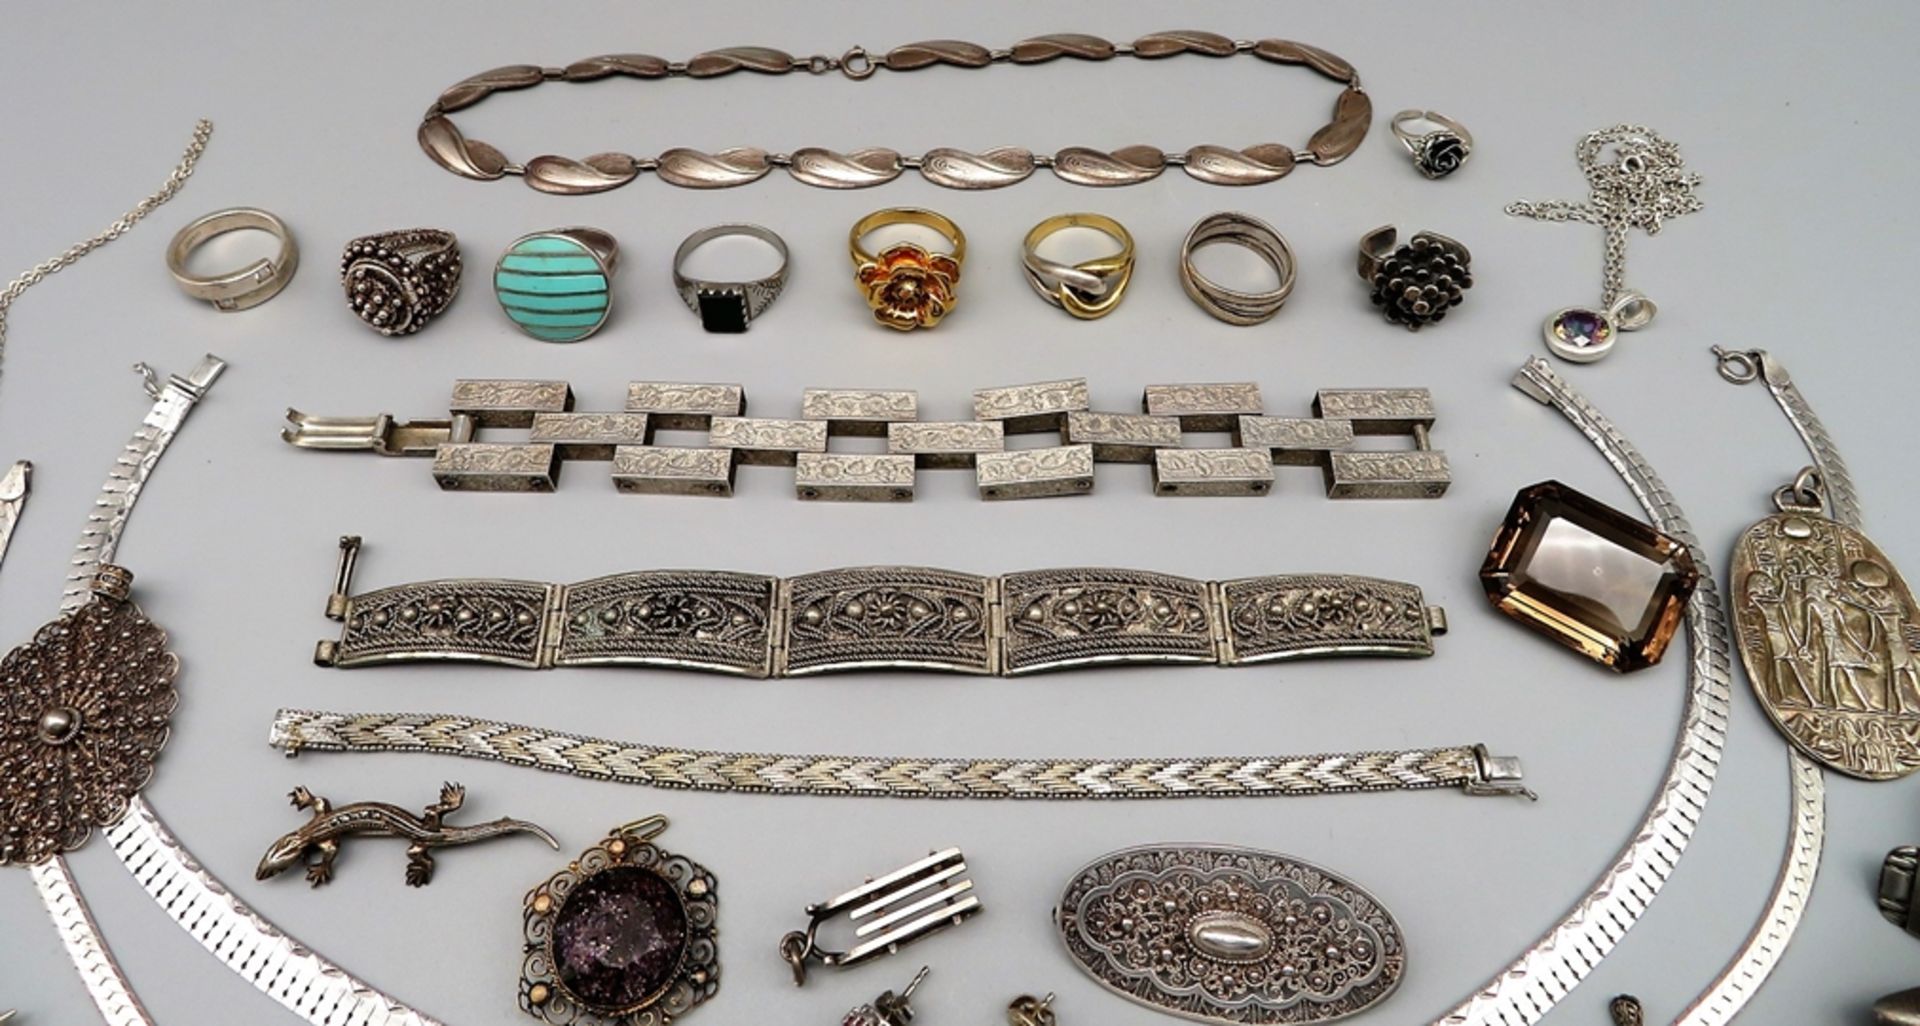 Großes Konvolut Silberschmuck, bestehend aus Ketten, Anhänger, Armbändern, Ringen, Broschen, Mansch - Image 2 of 3